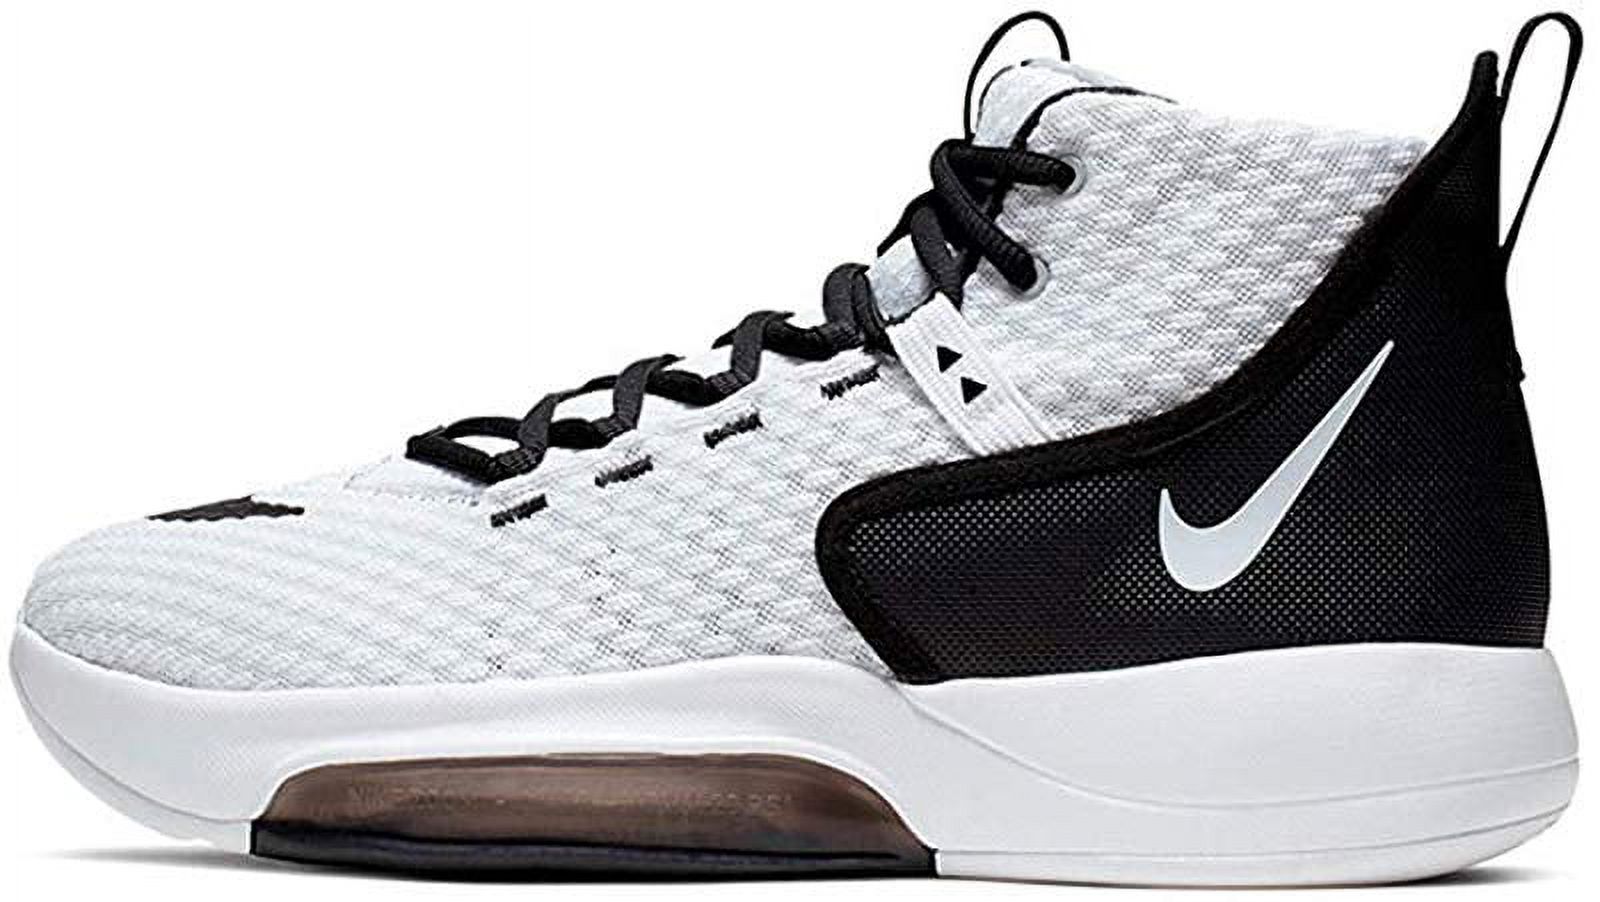 Nike Men's Zoom Rize TB Basketball Shoe, White/Black, 12.5 D(M) US - image 1 of 4